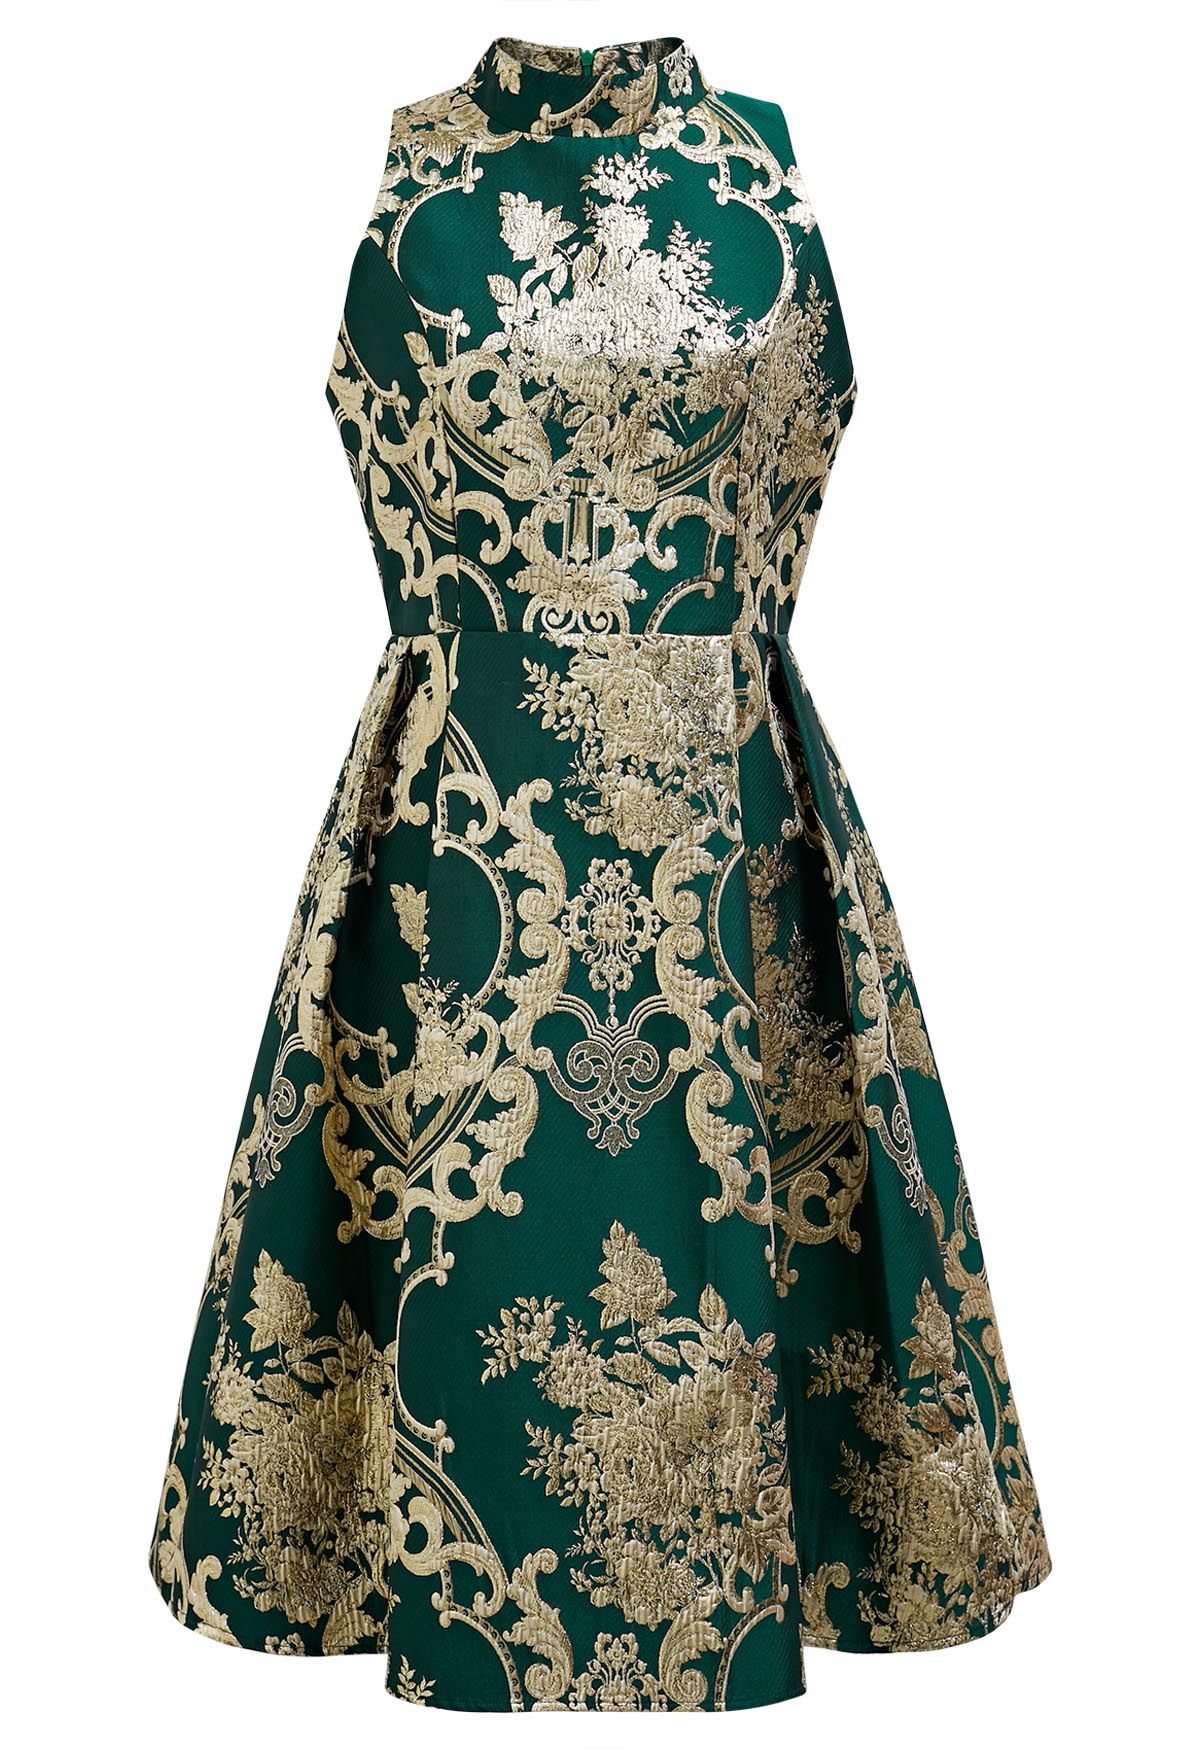 Splendid Peony Baroque Jacquard Sleeveless Dress in Dark Green